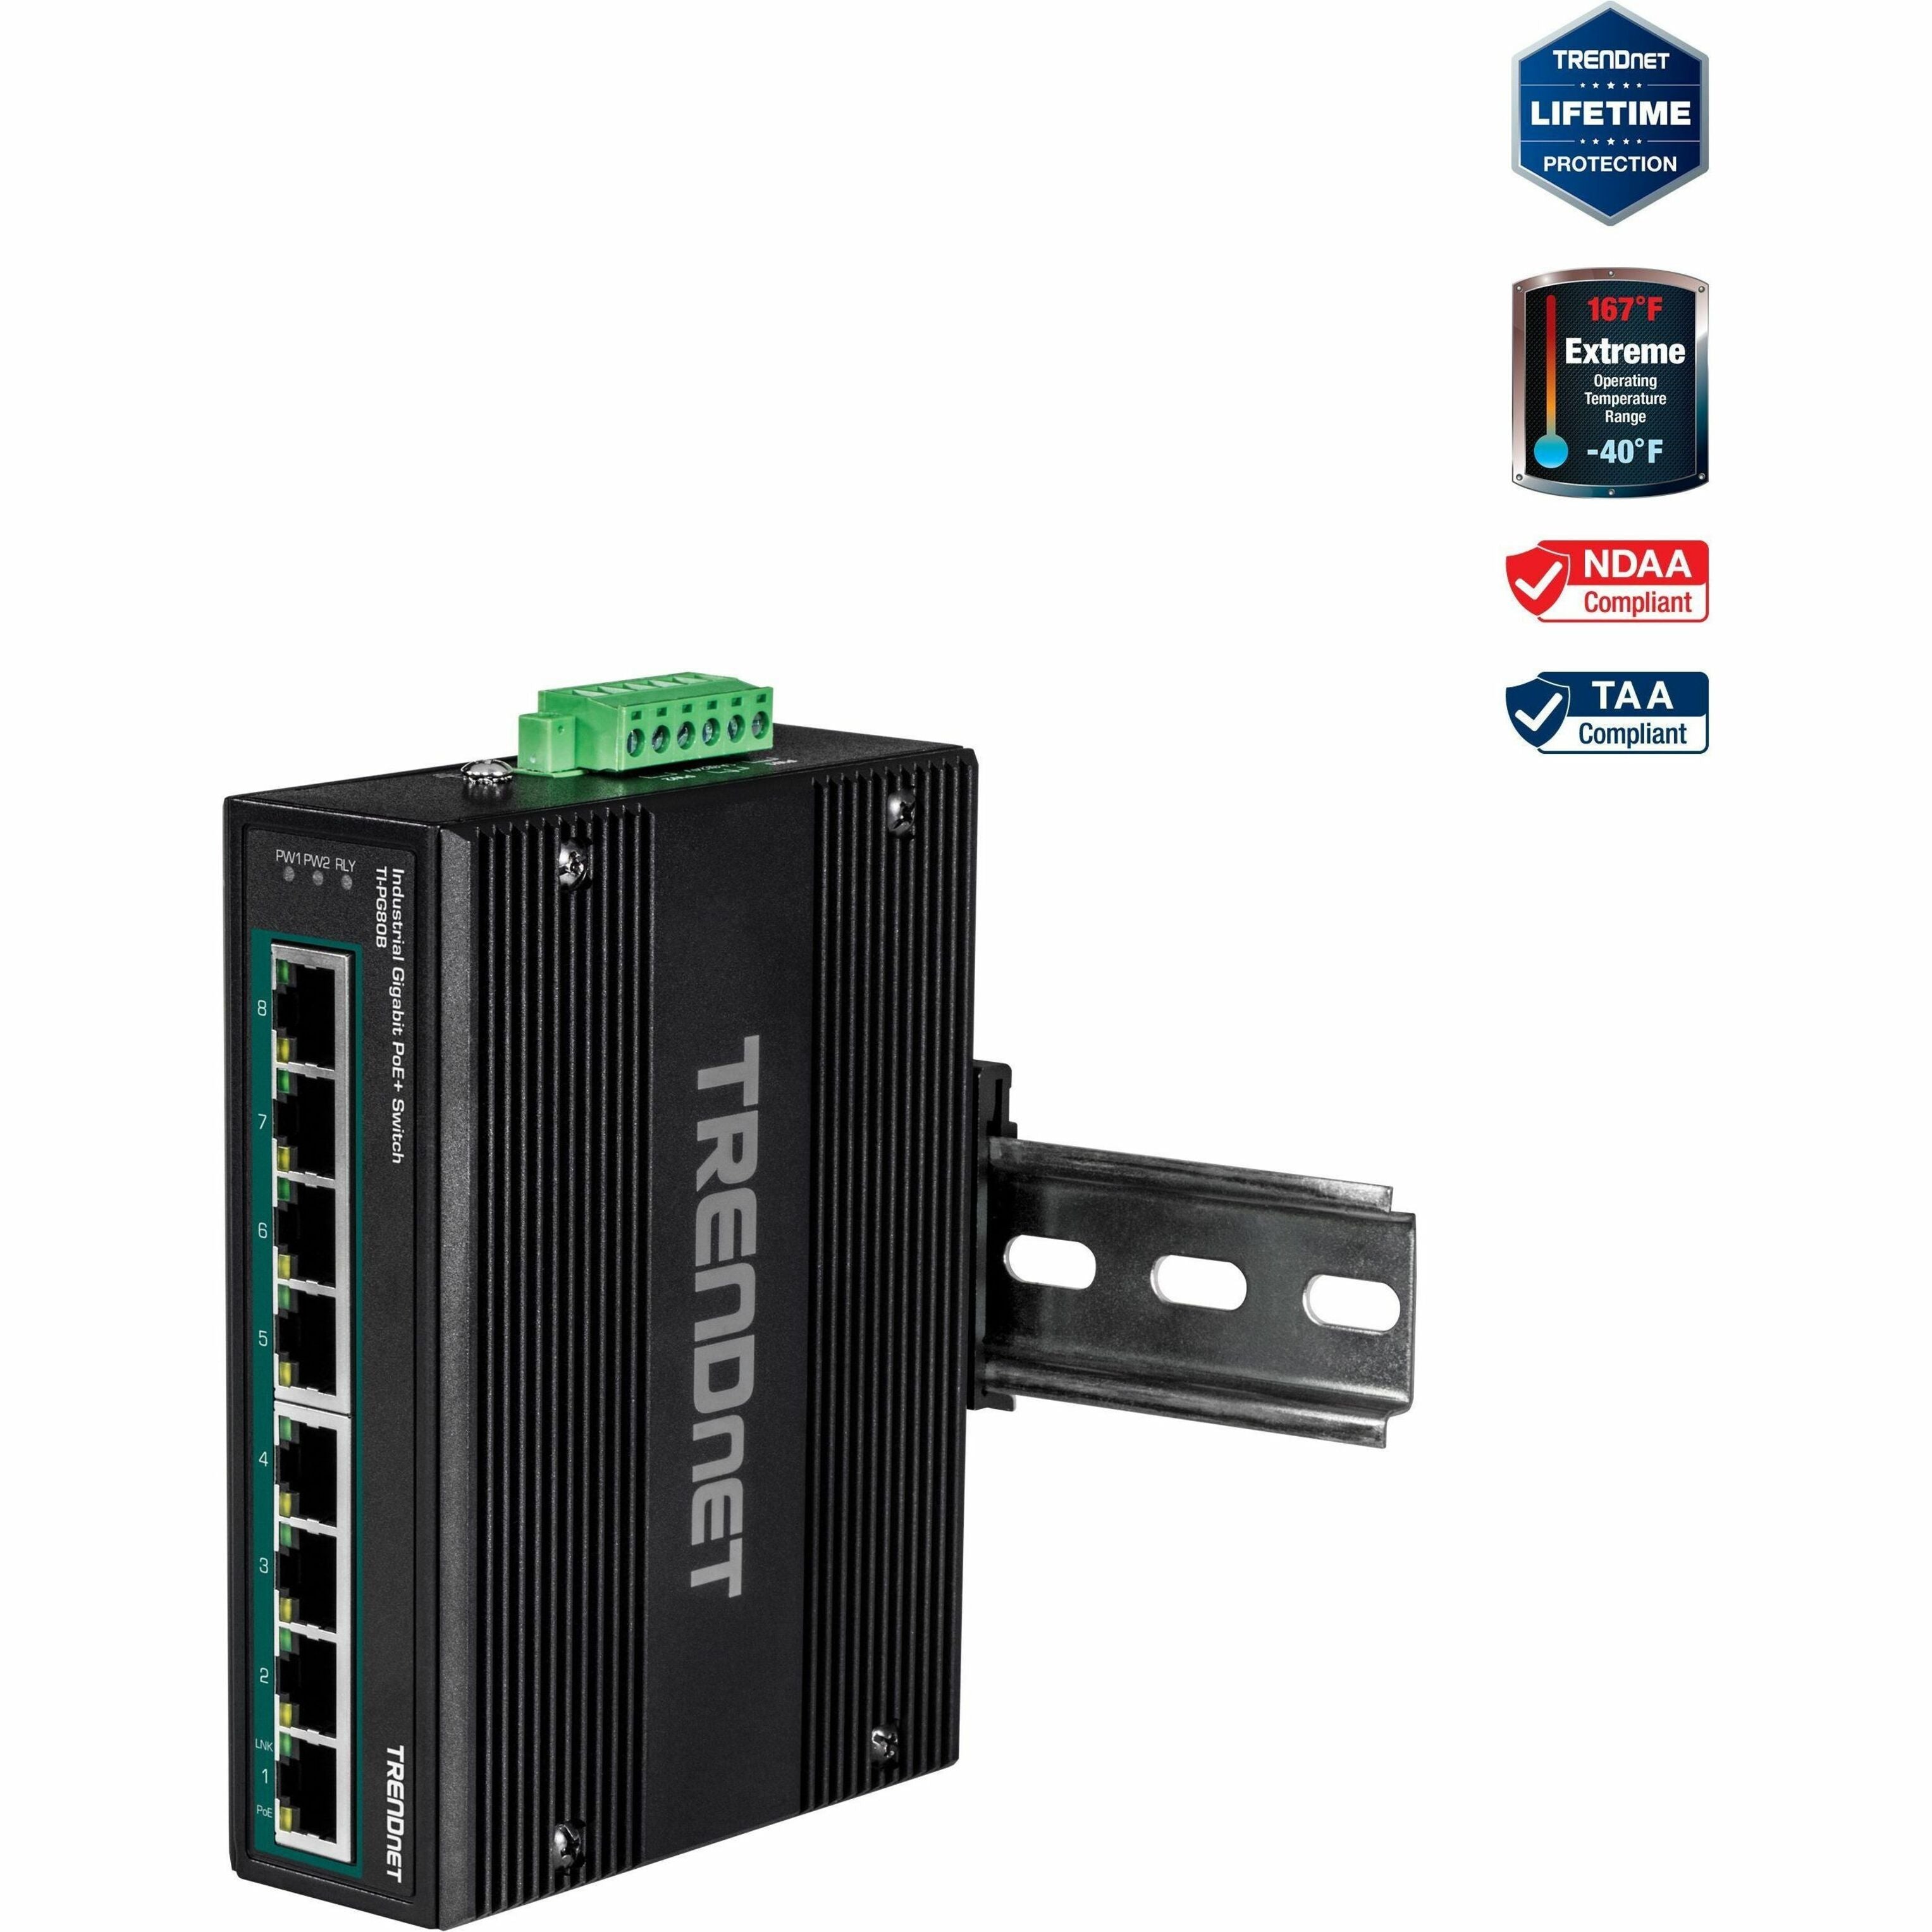 TRENDnet TI-PG80B 8-Port Industrial Gigabit PoE+ DIN-Rail Switch, Reliable Network Connectivity